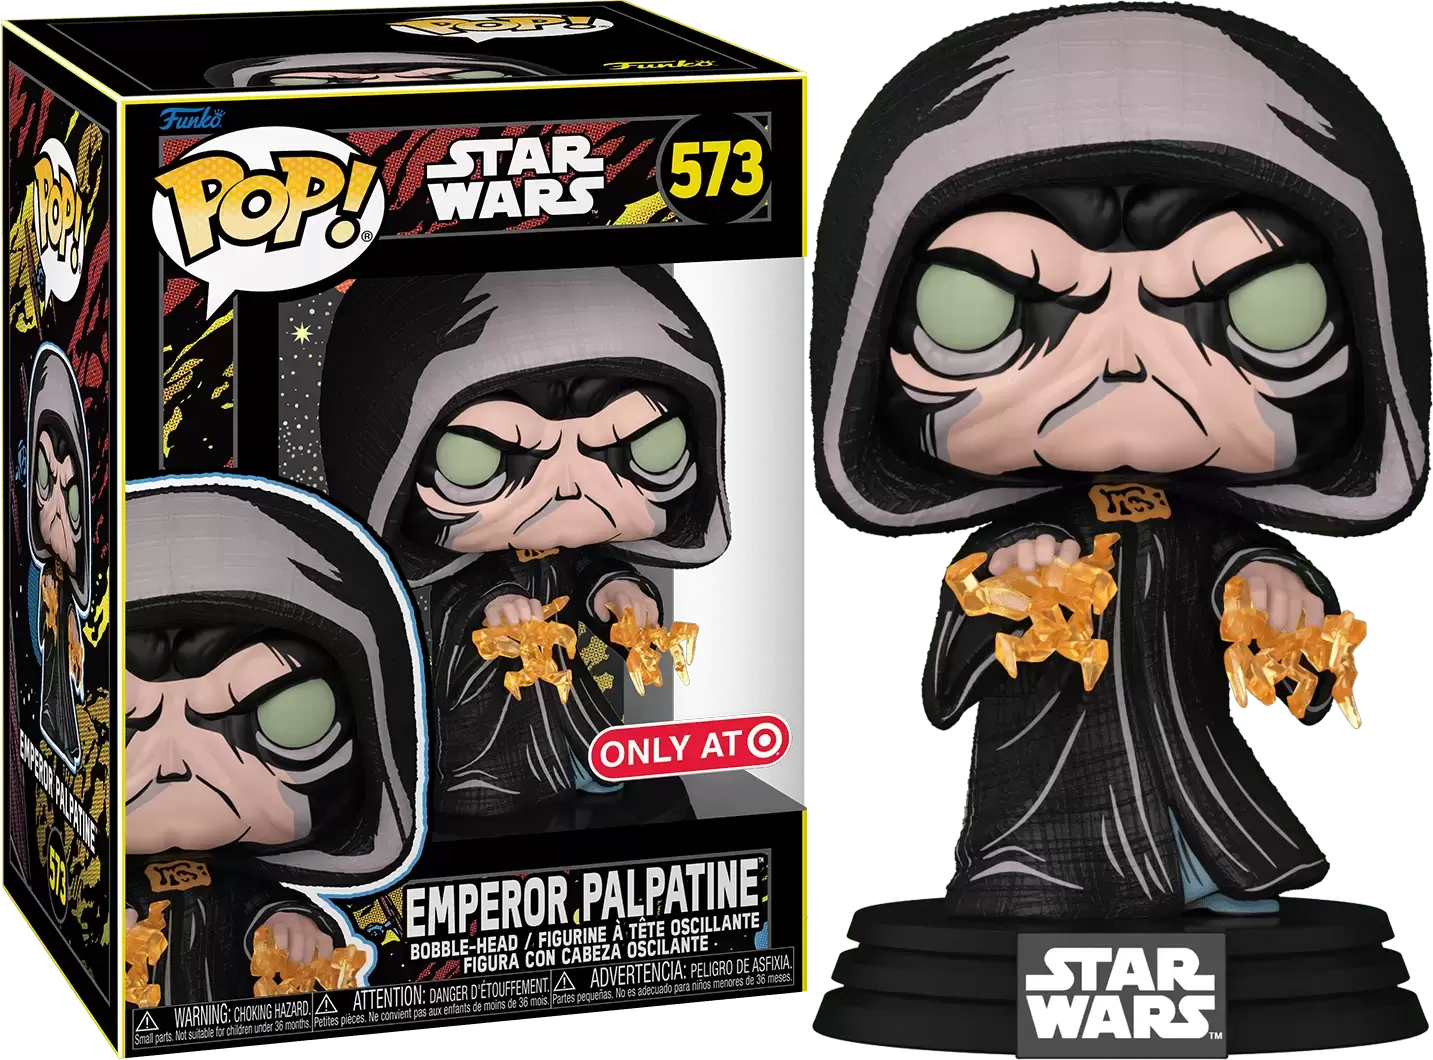 Emperor Palpatine Retro - POP! Star Wars action figure 573